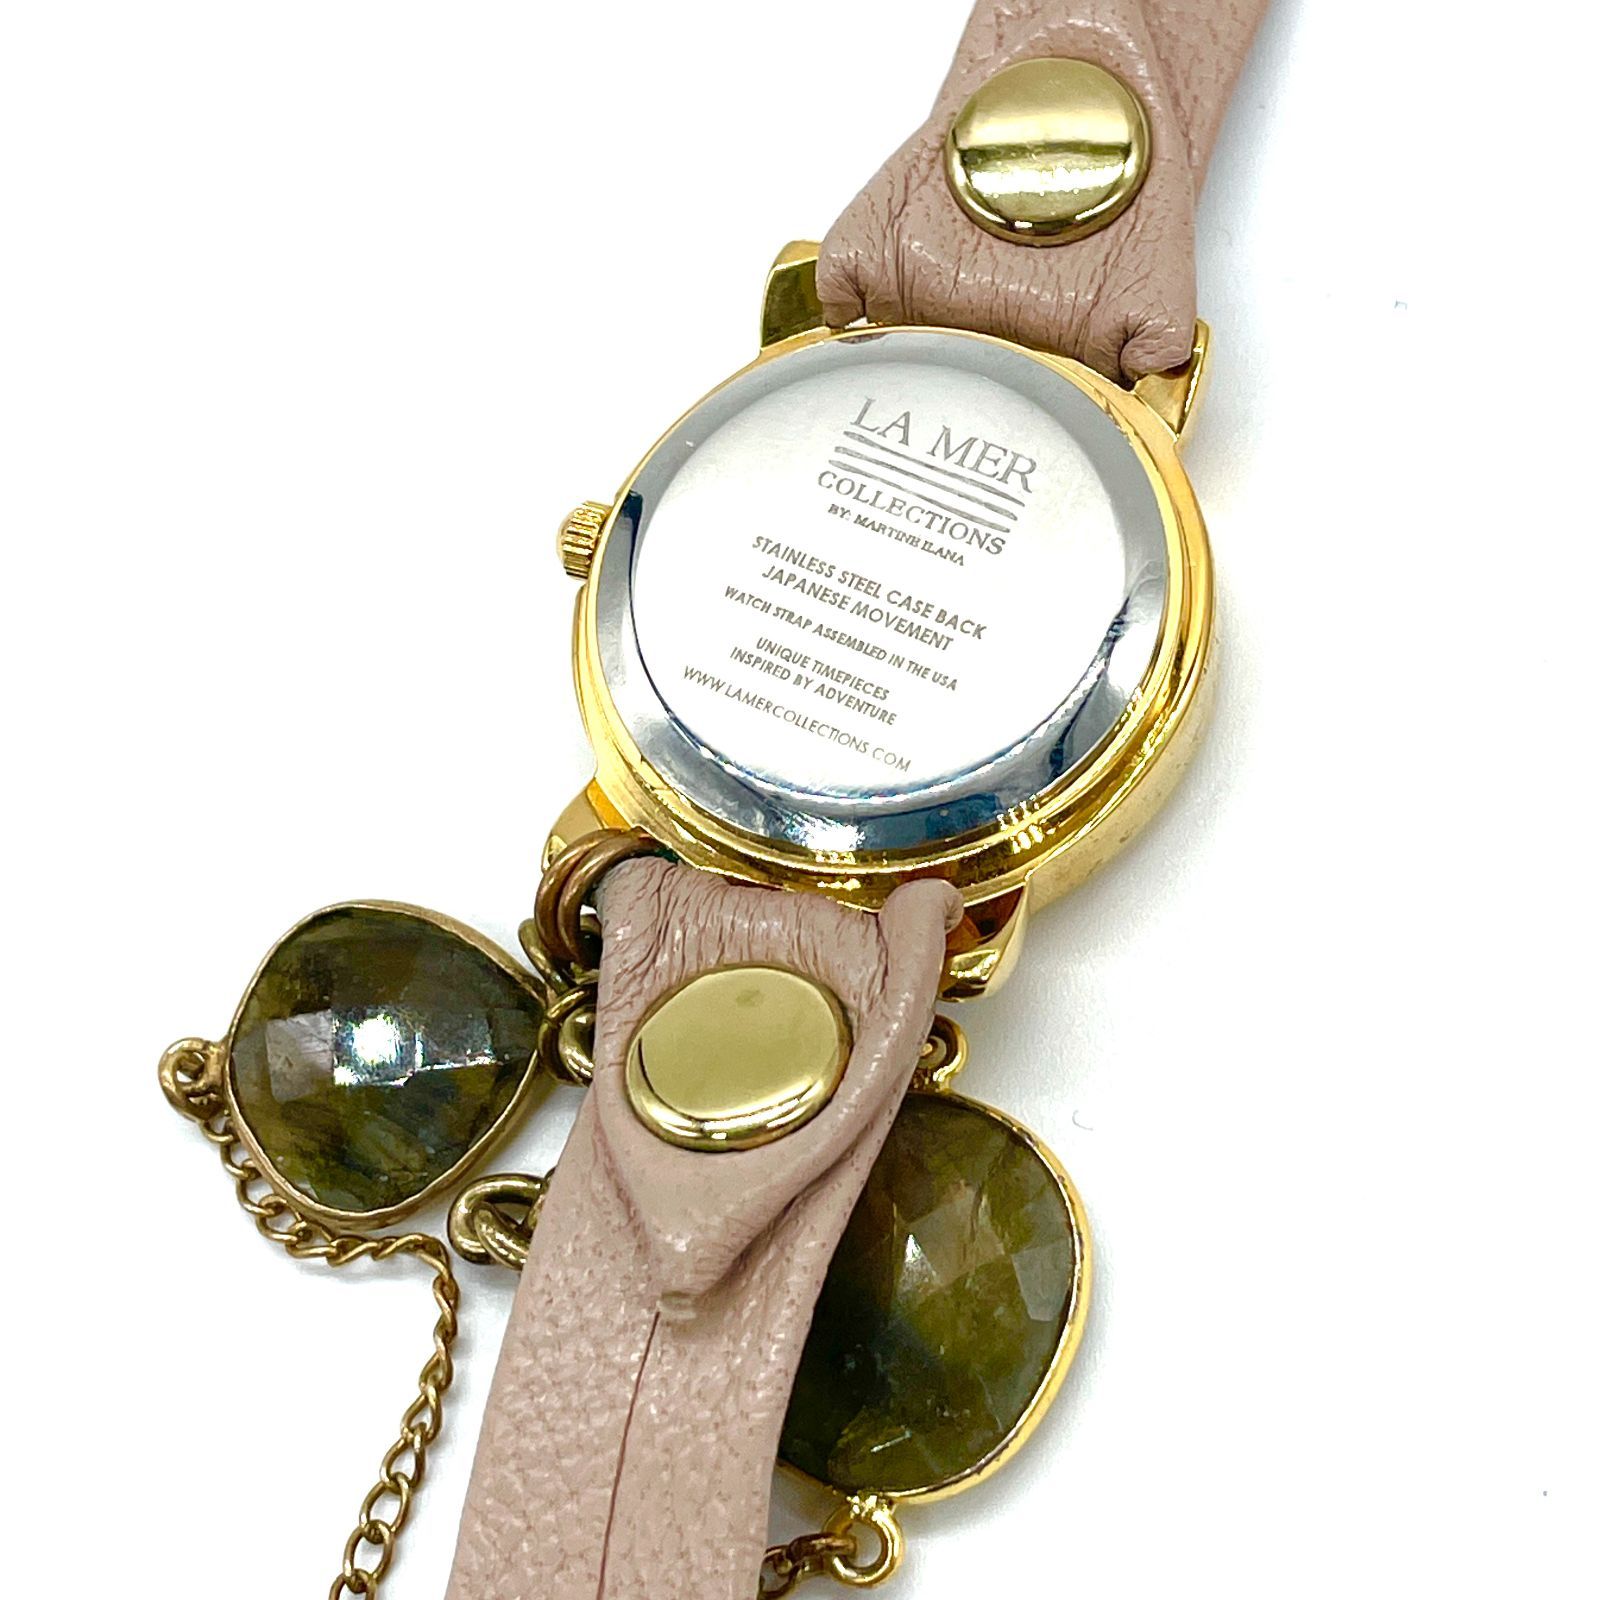 LA MER Collections ラ・メール ラブラドライト 3連腕時計 クォーツ式 フェルスパー